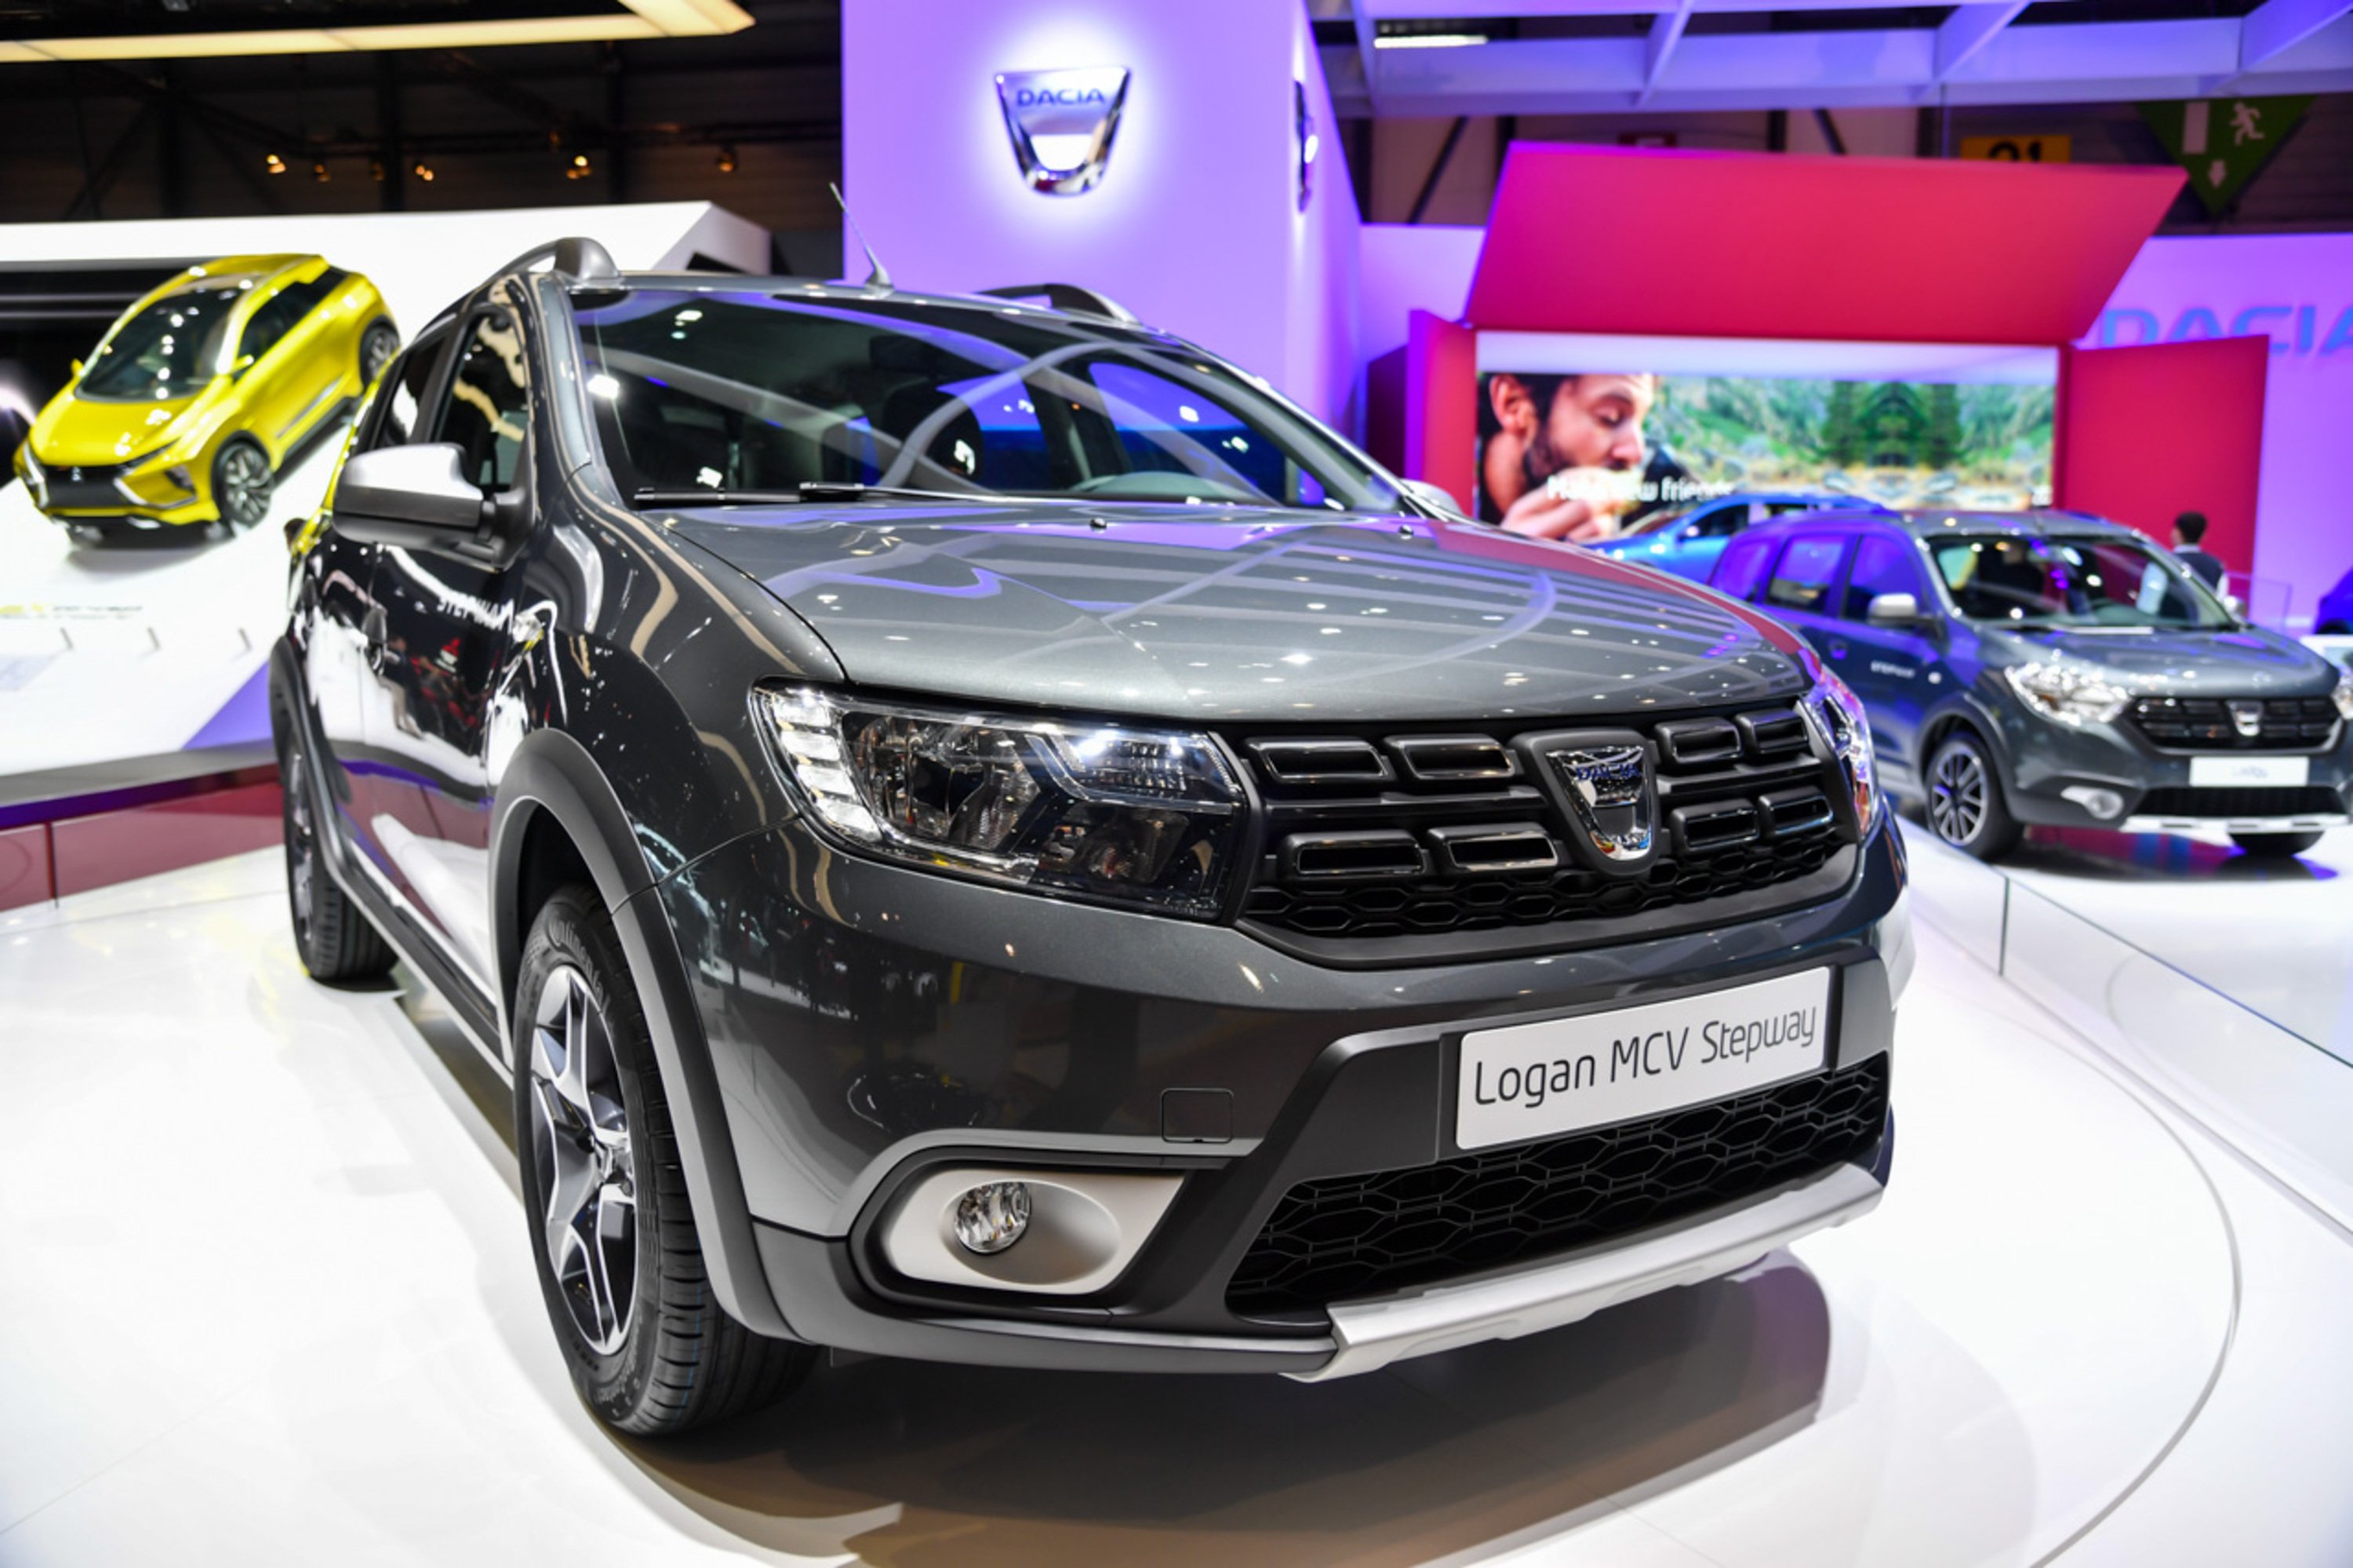 Dacia al Salone di Ginevra 2017